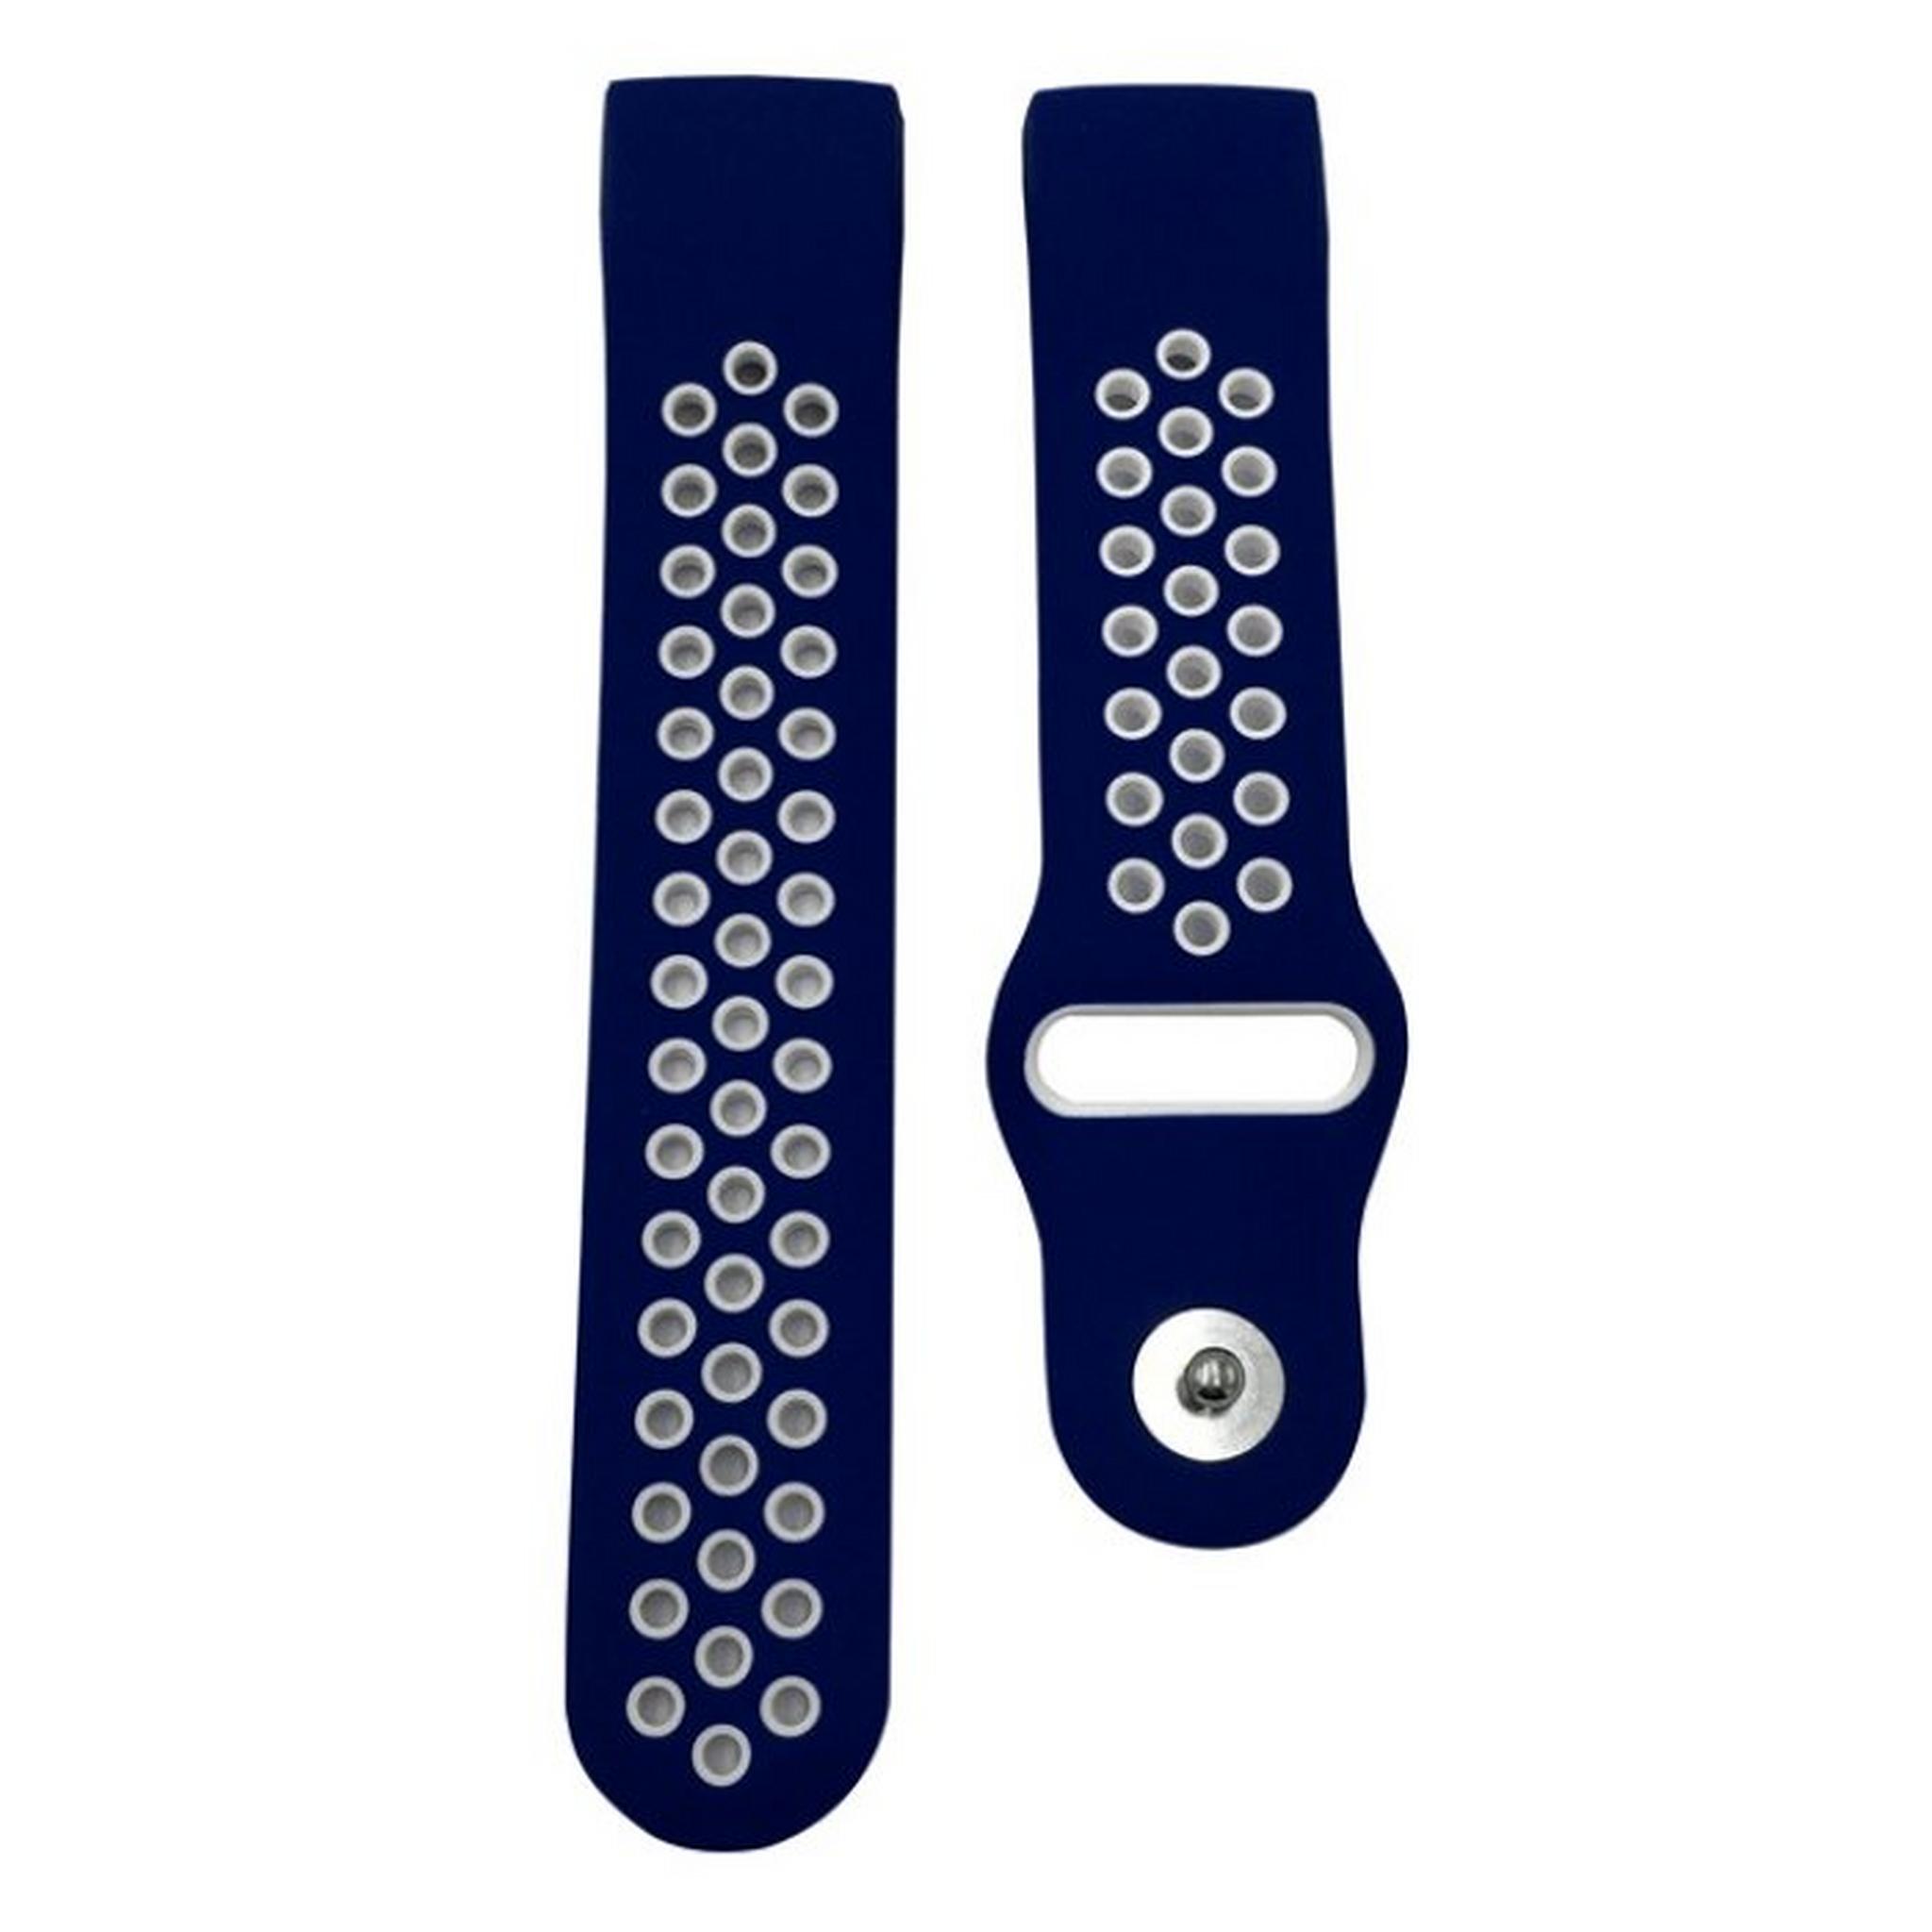 EQ 22mm Silicone Watch Band - Blue/White